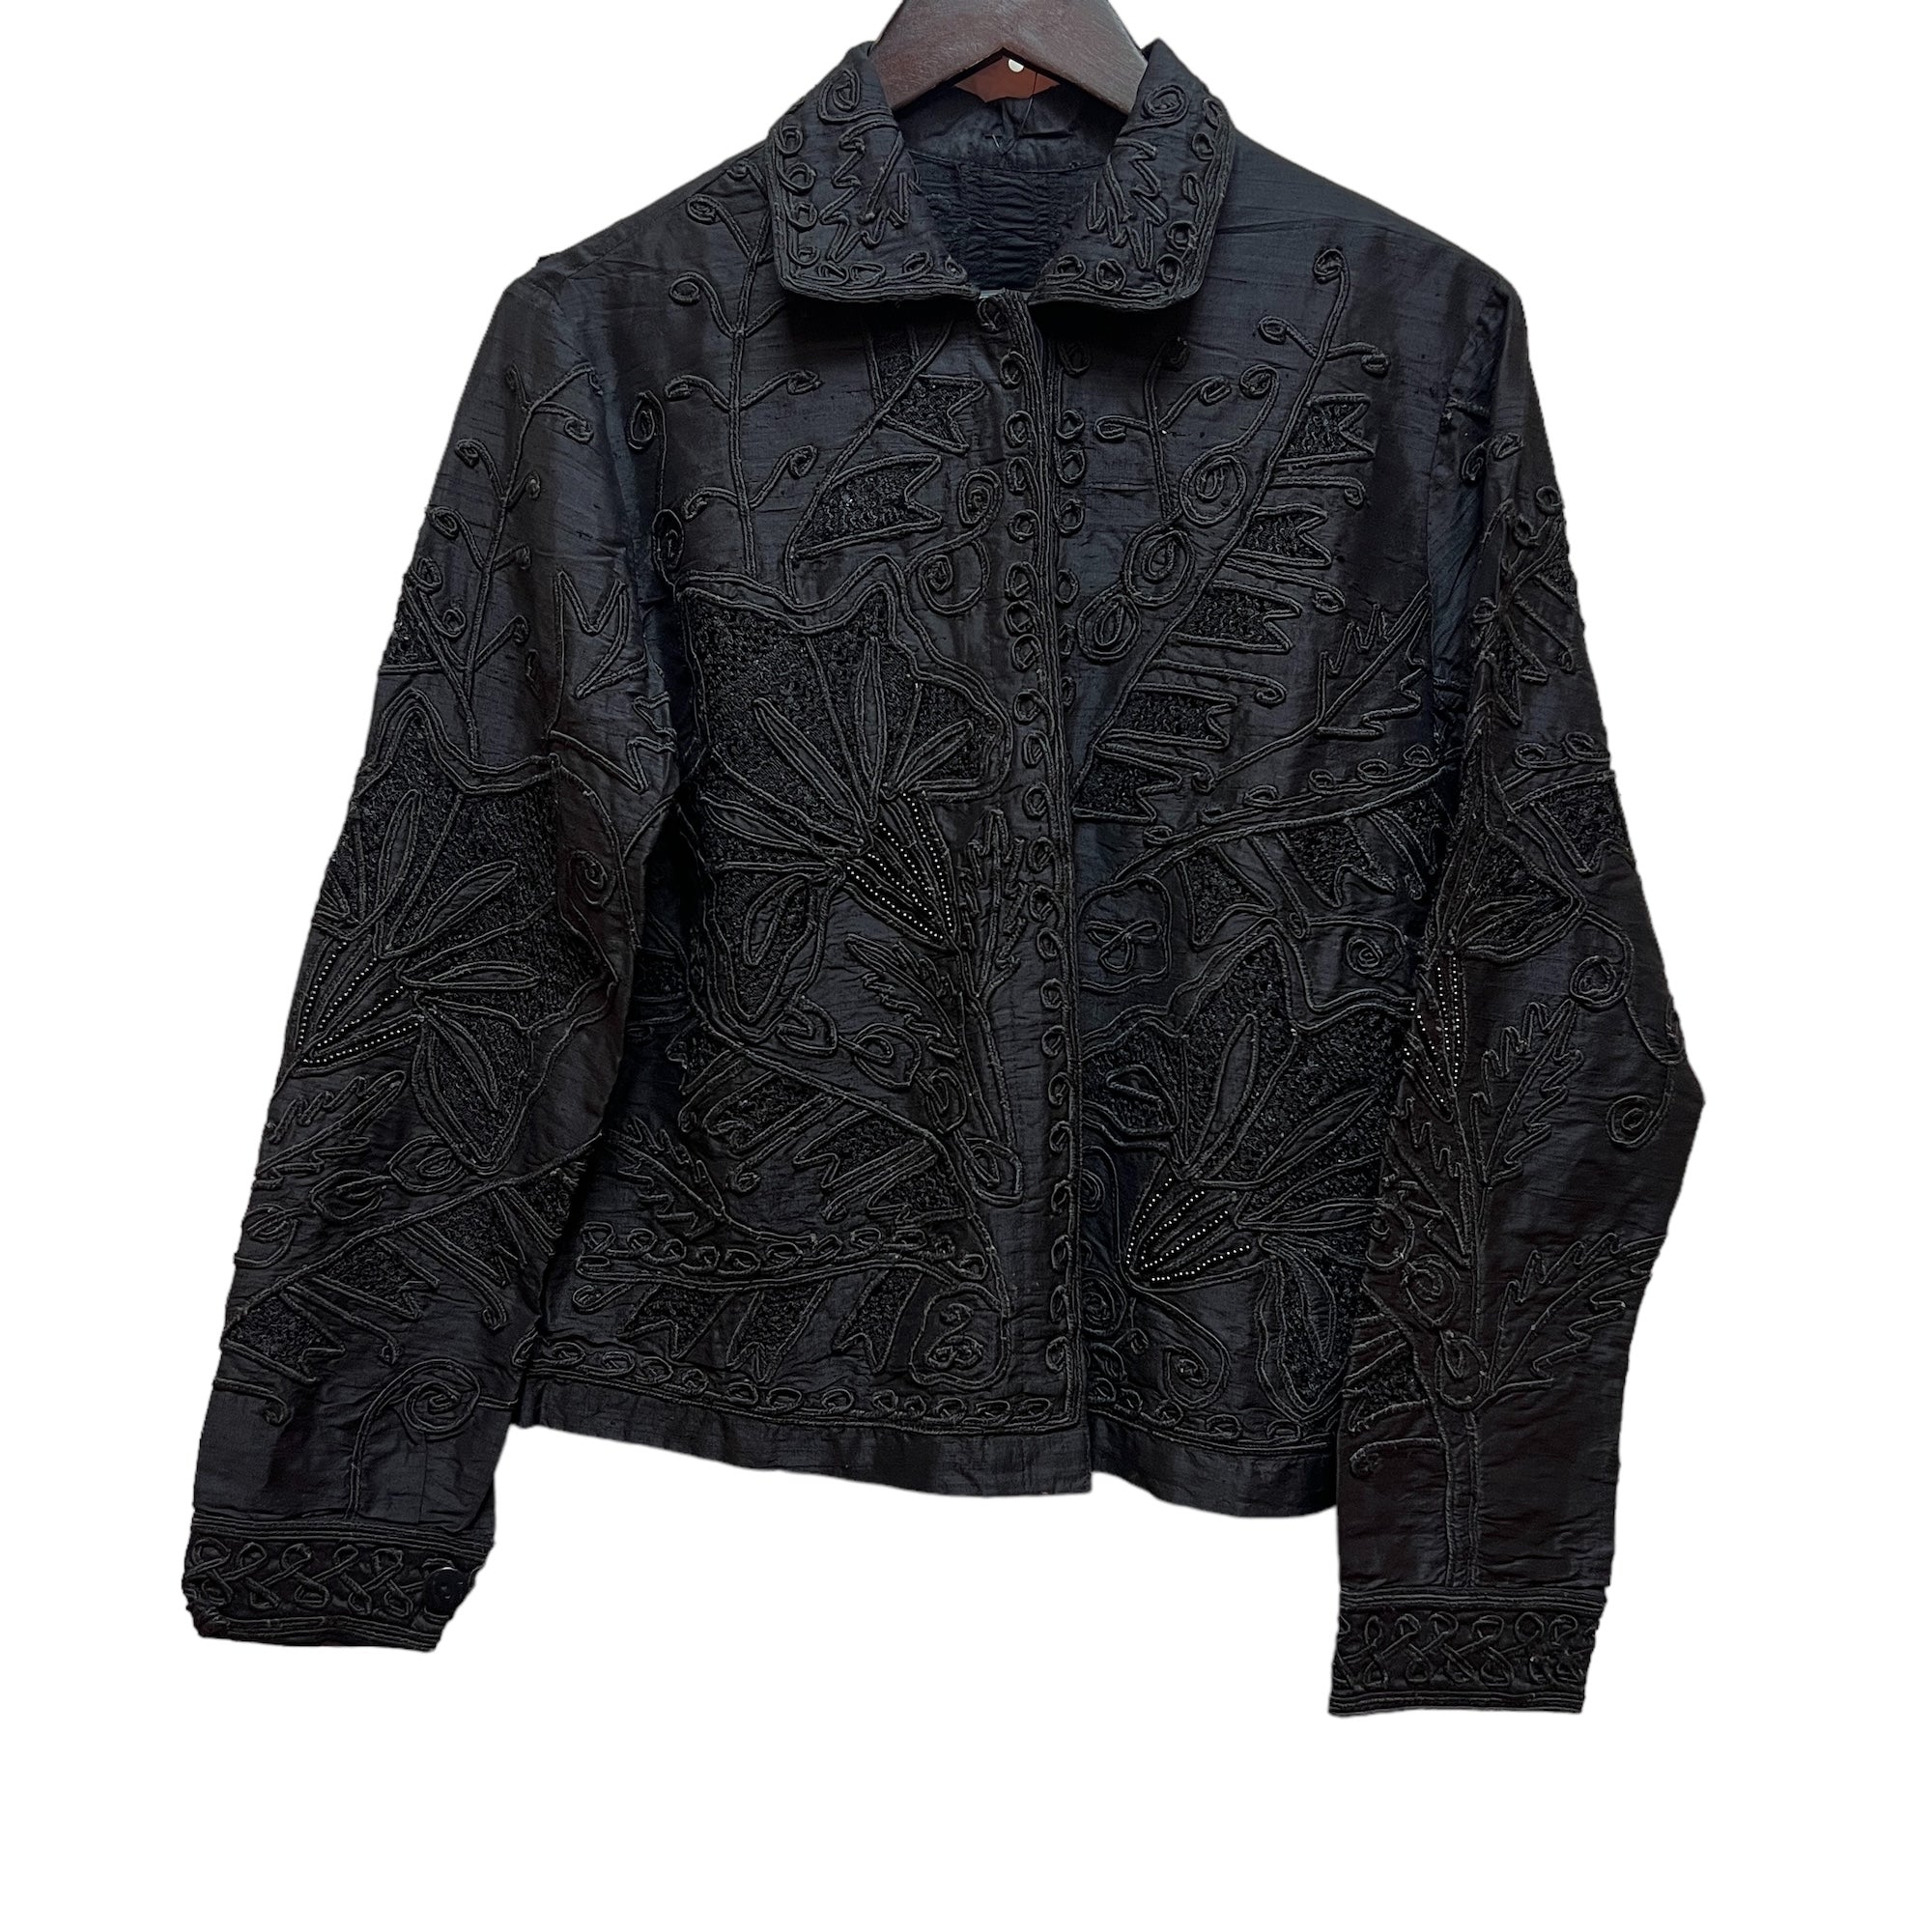 Black Embroidered Jacket - Vintage India NYC